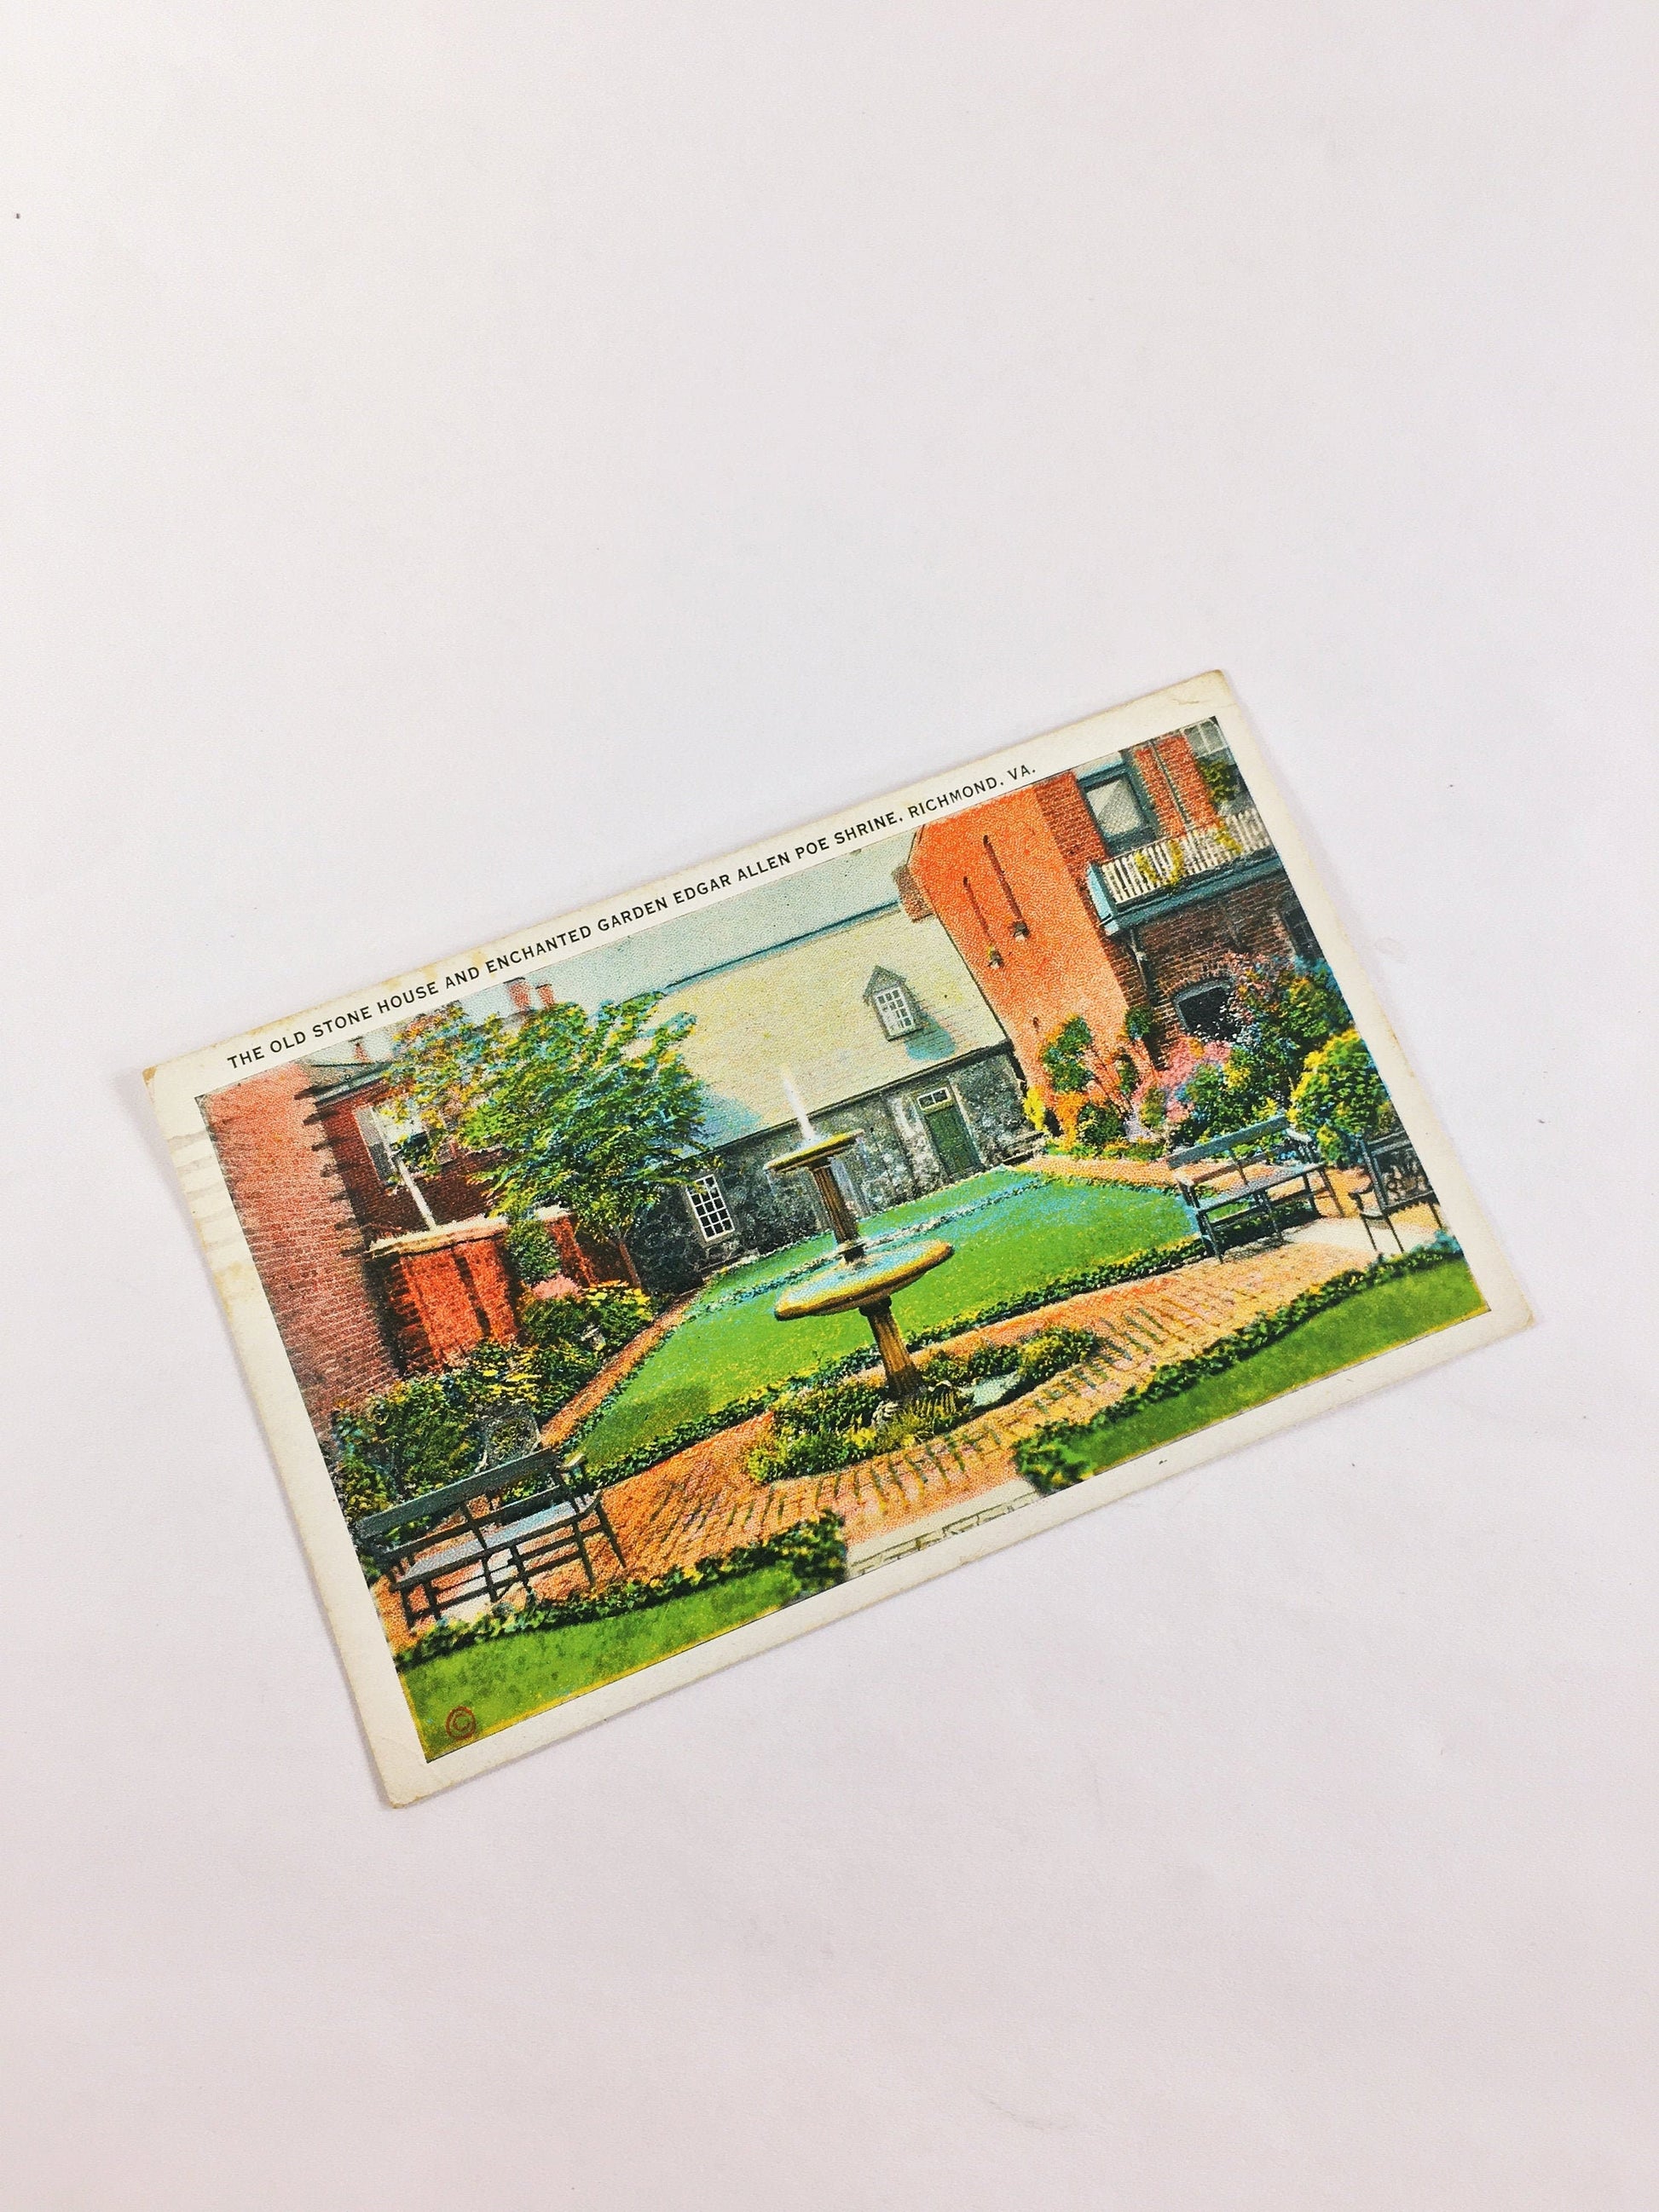 1930s Vintage Edgar Allan Poe shrine of house and enchanted garden linen postcard. Old Stone House in Richmond Virginia